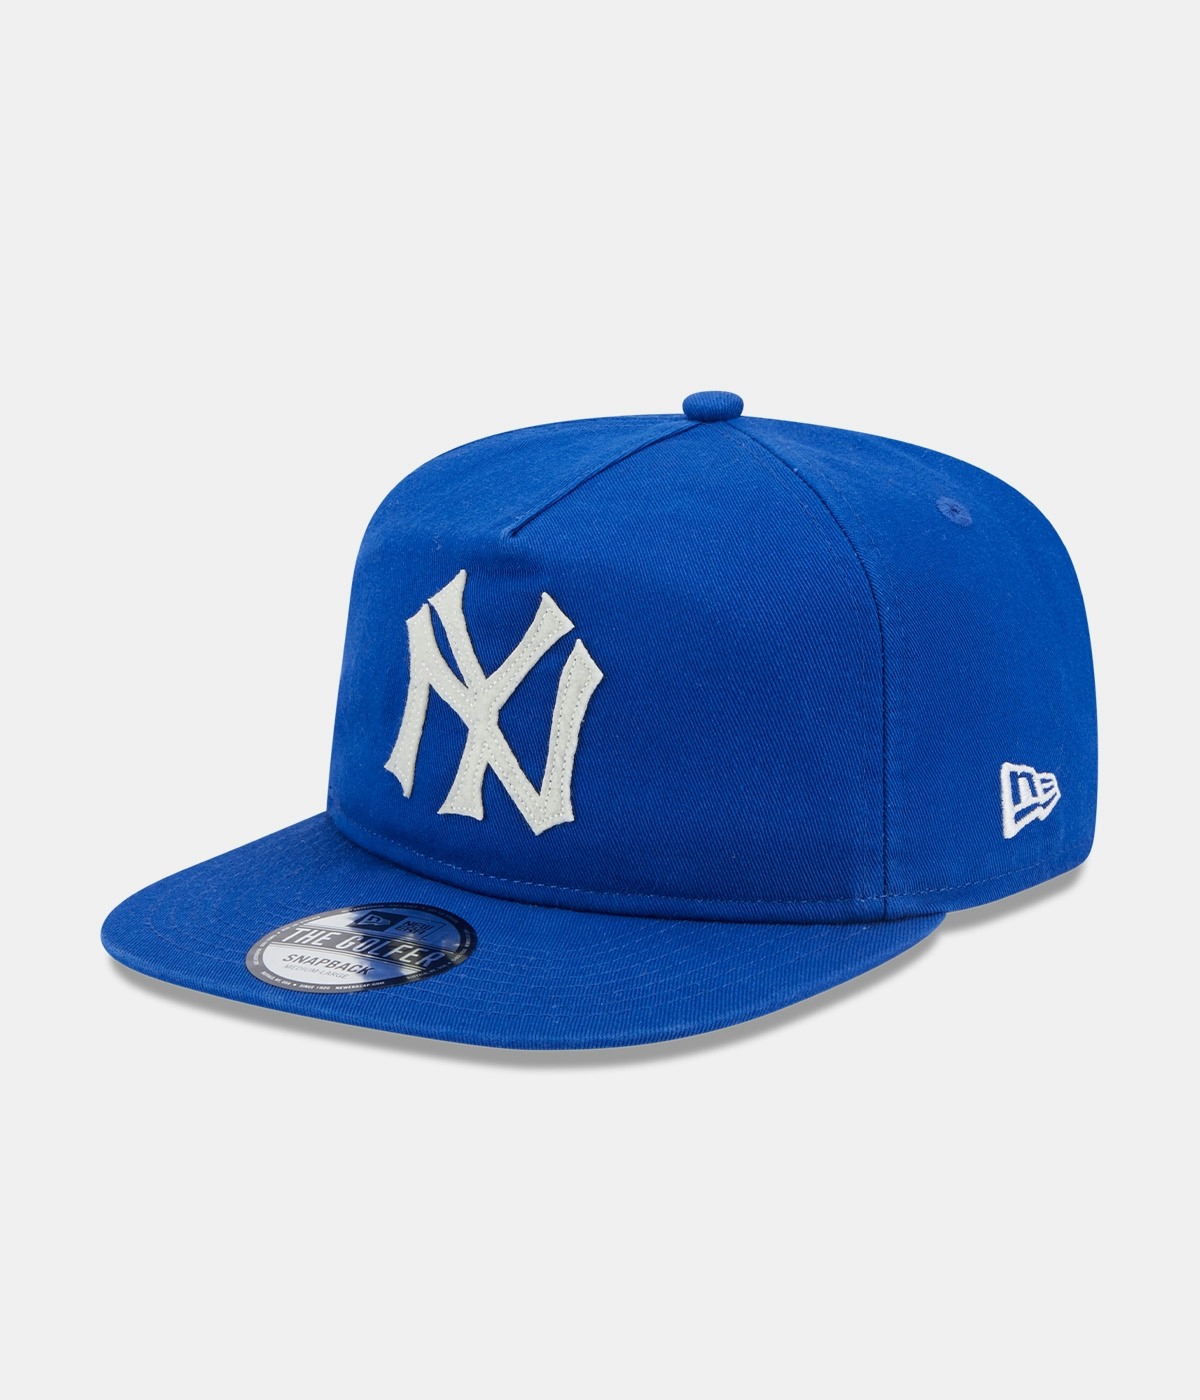 New Era Mlb World Series Golfer New York Yankees Caps Blue